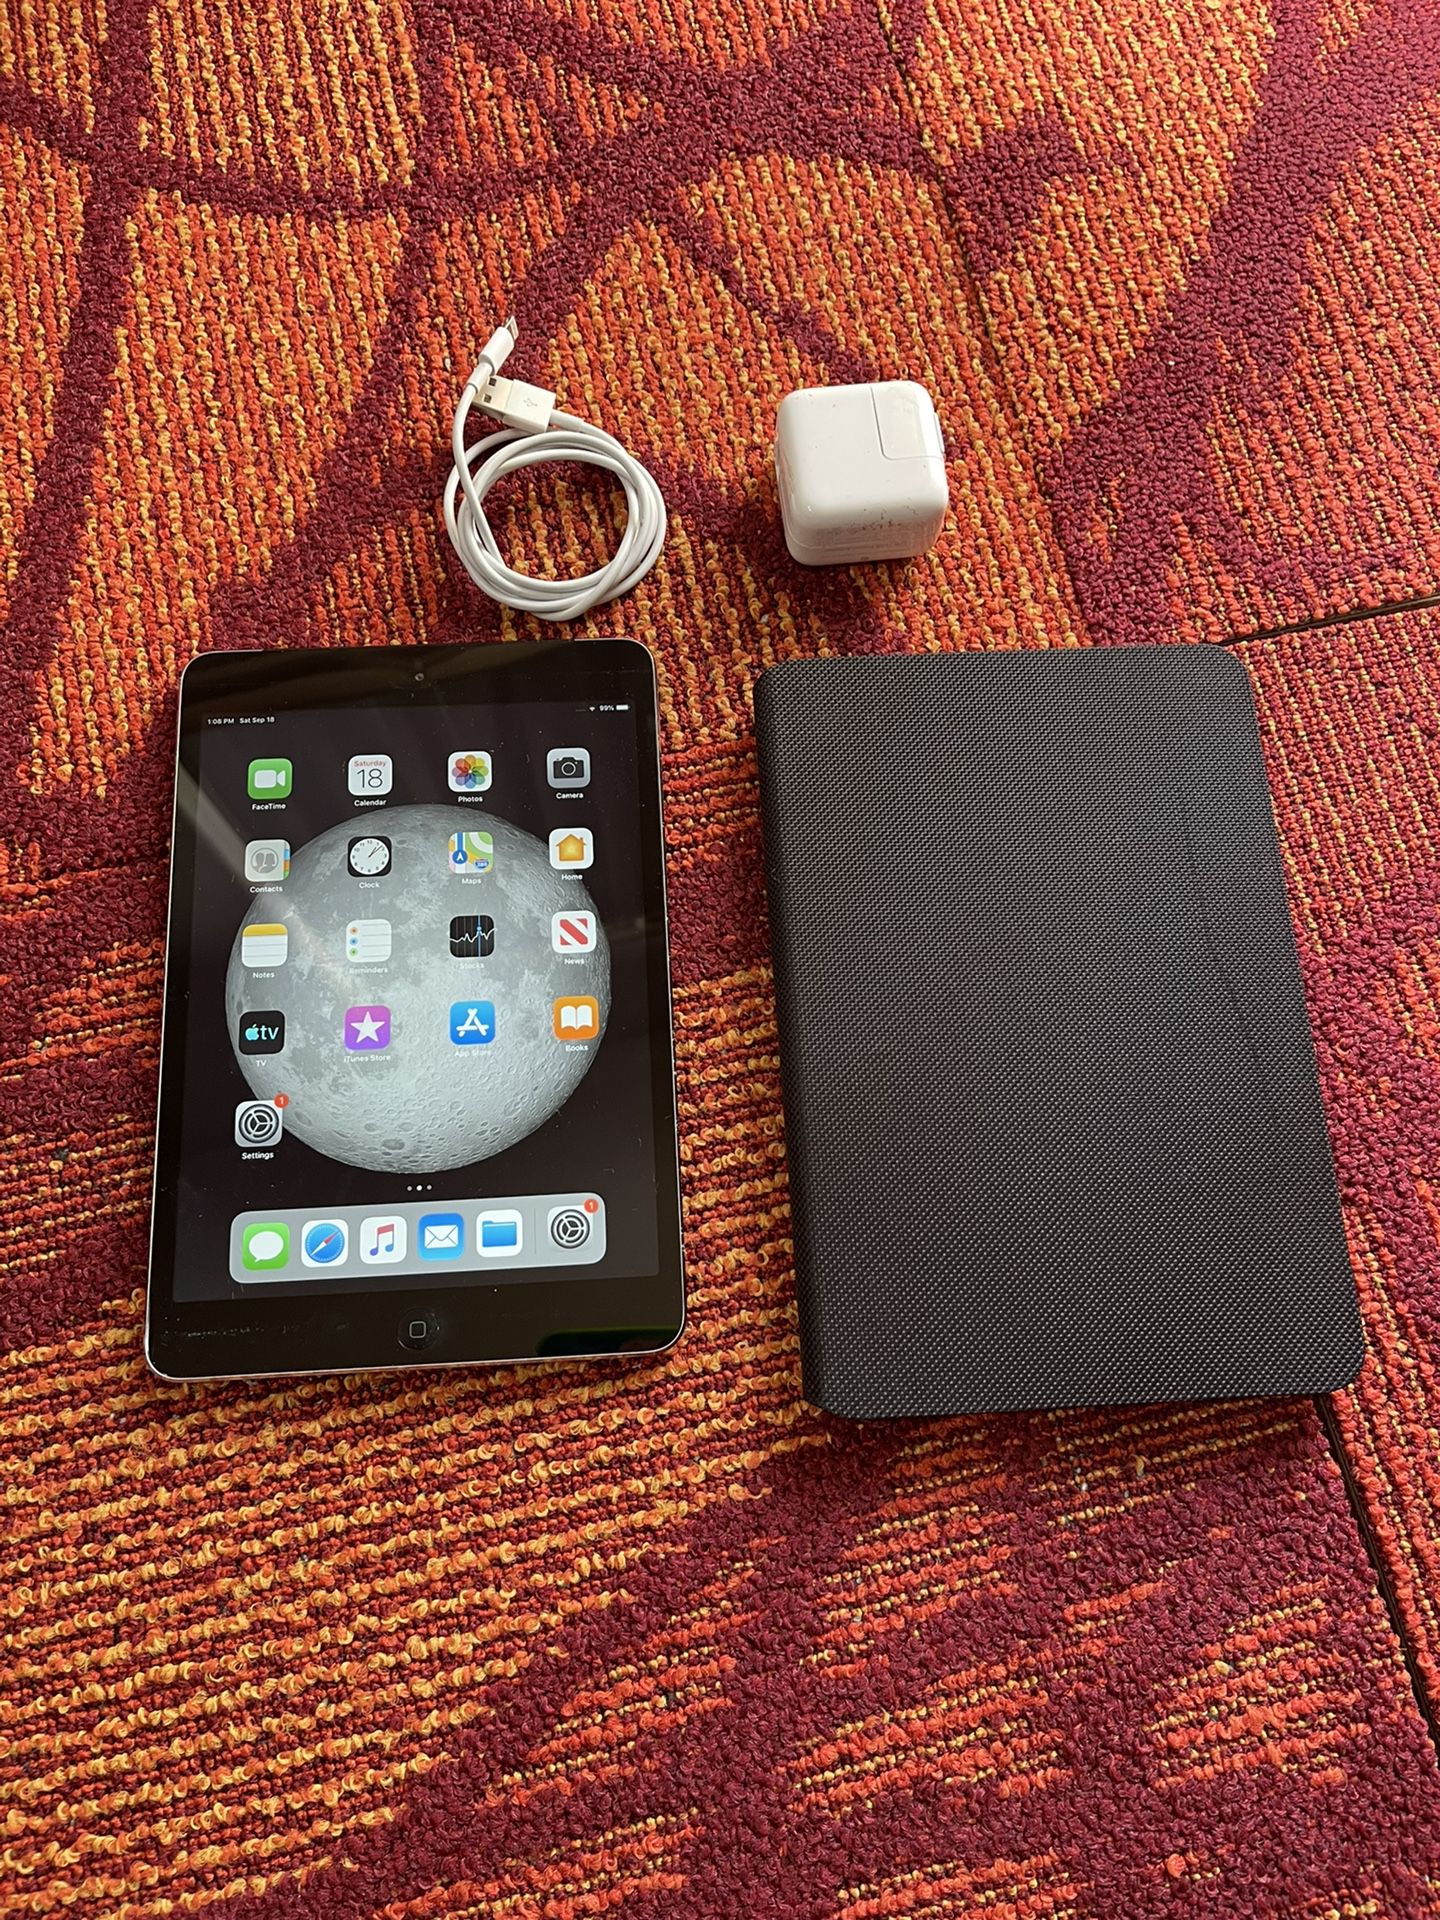 Apple iPad mini 2 32gb Cellular Verizon FIRM ON PRICE $135